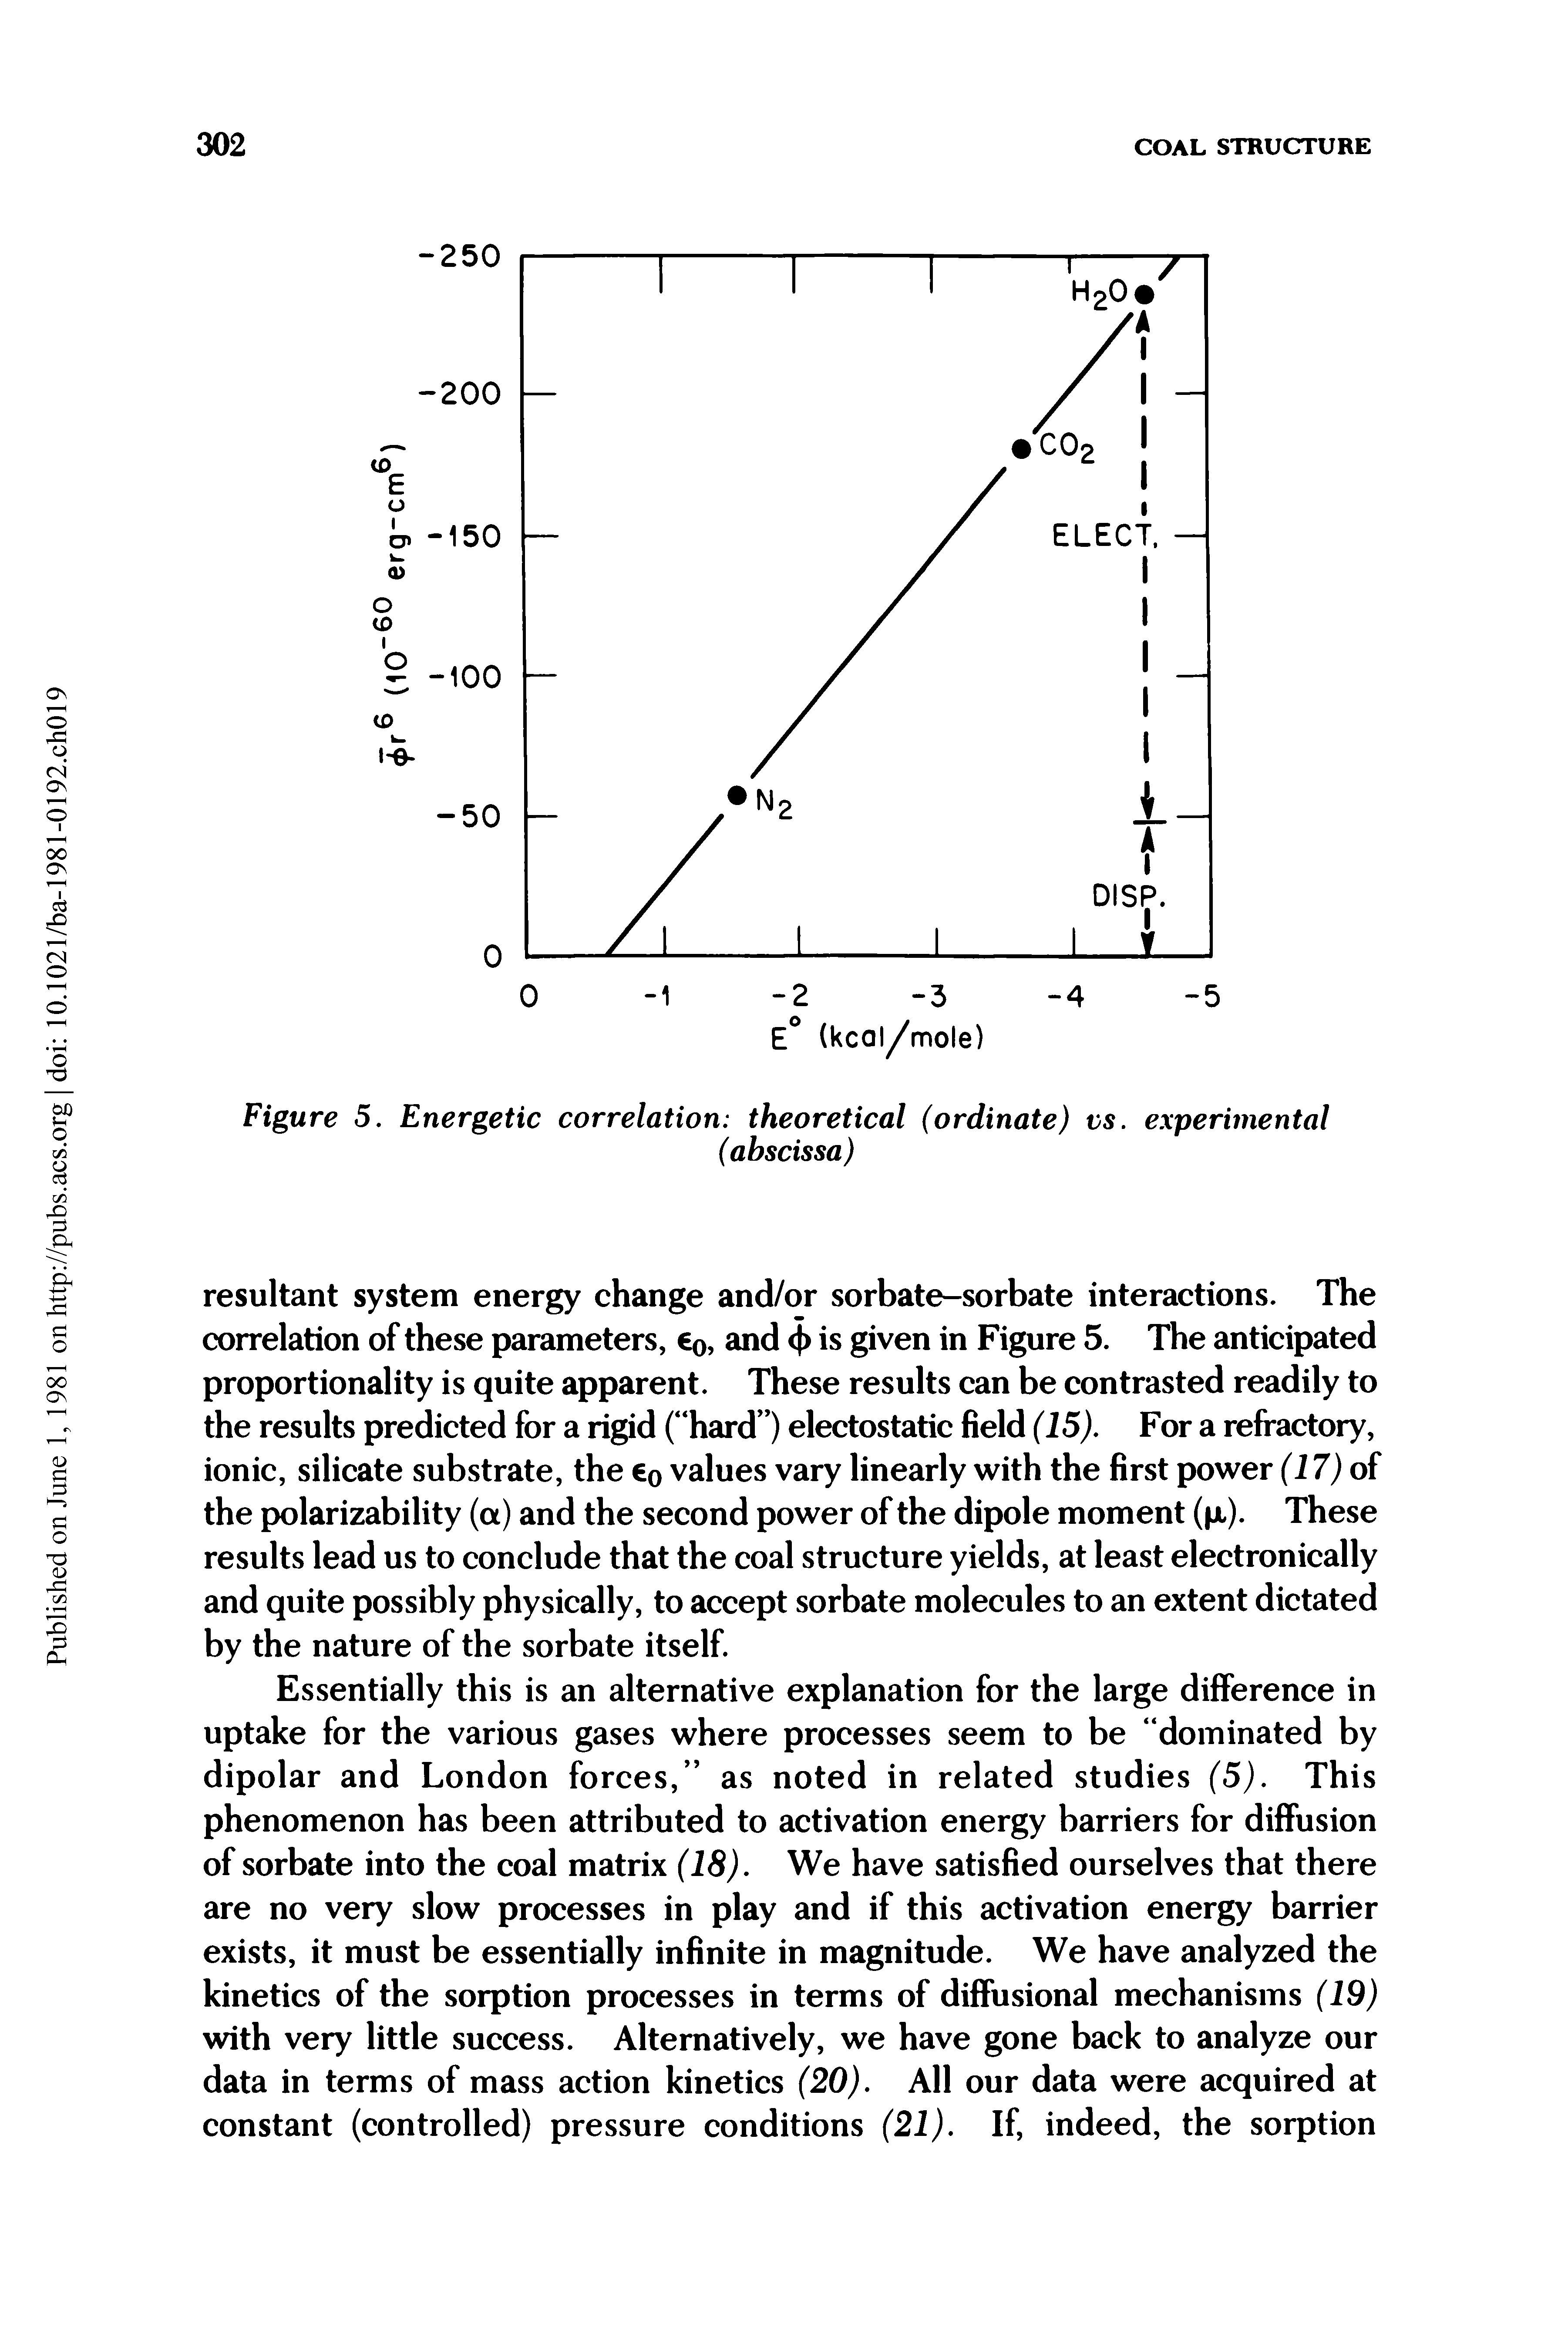 Figure 5. Energetic correlation theoretical (ordinate) vs. experimental...